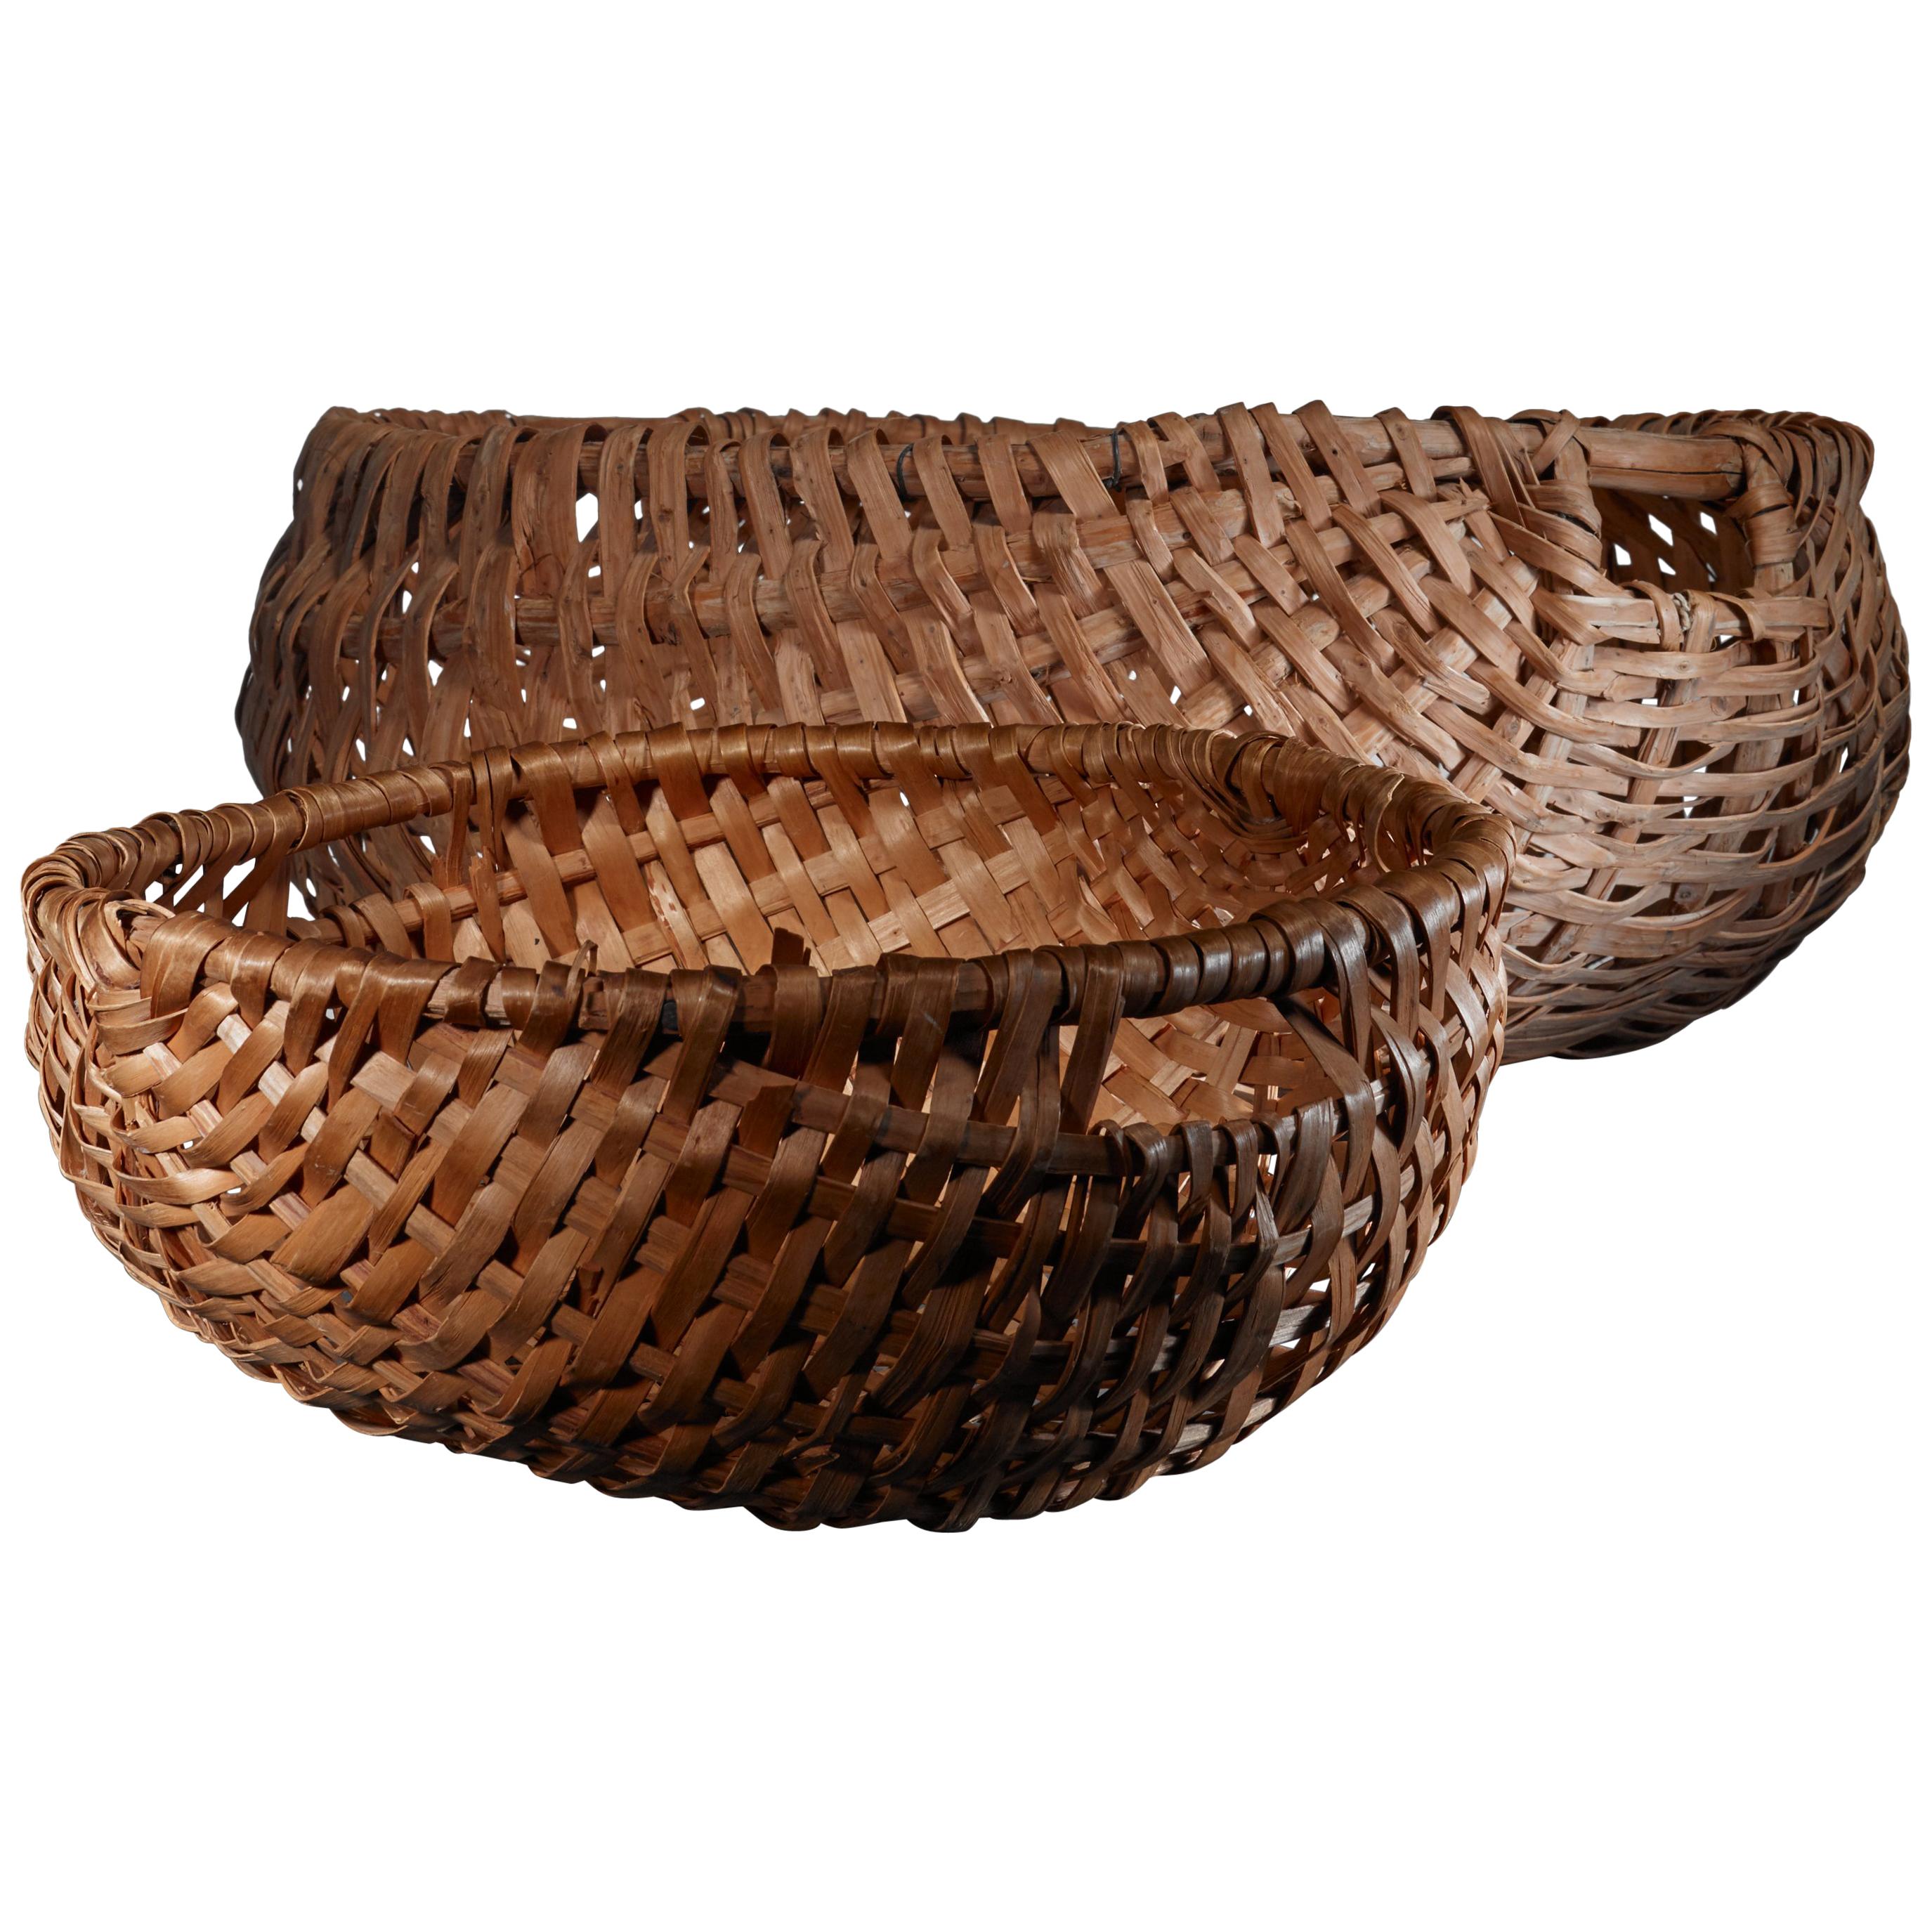 Scandinavian folk art with floral decoration Splint woven beechwood baskets with handle Handmade vintage blueberry basket from Sweden